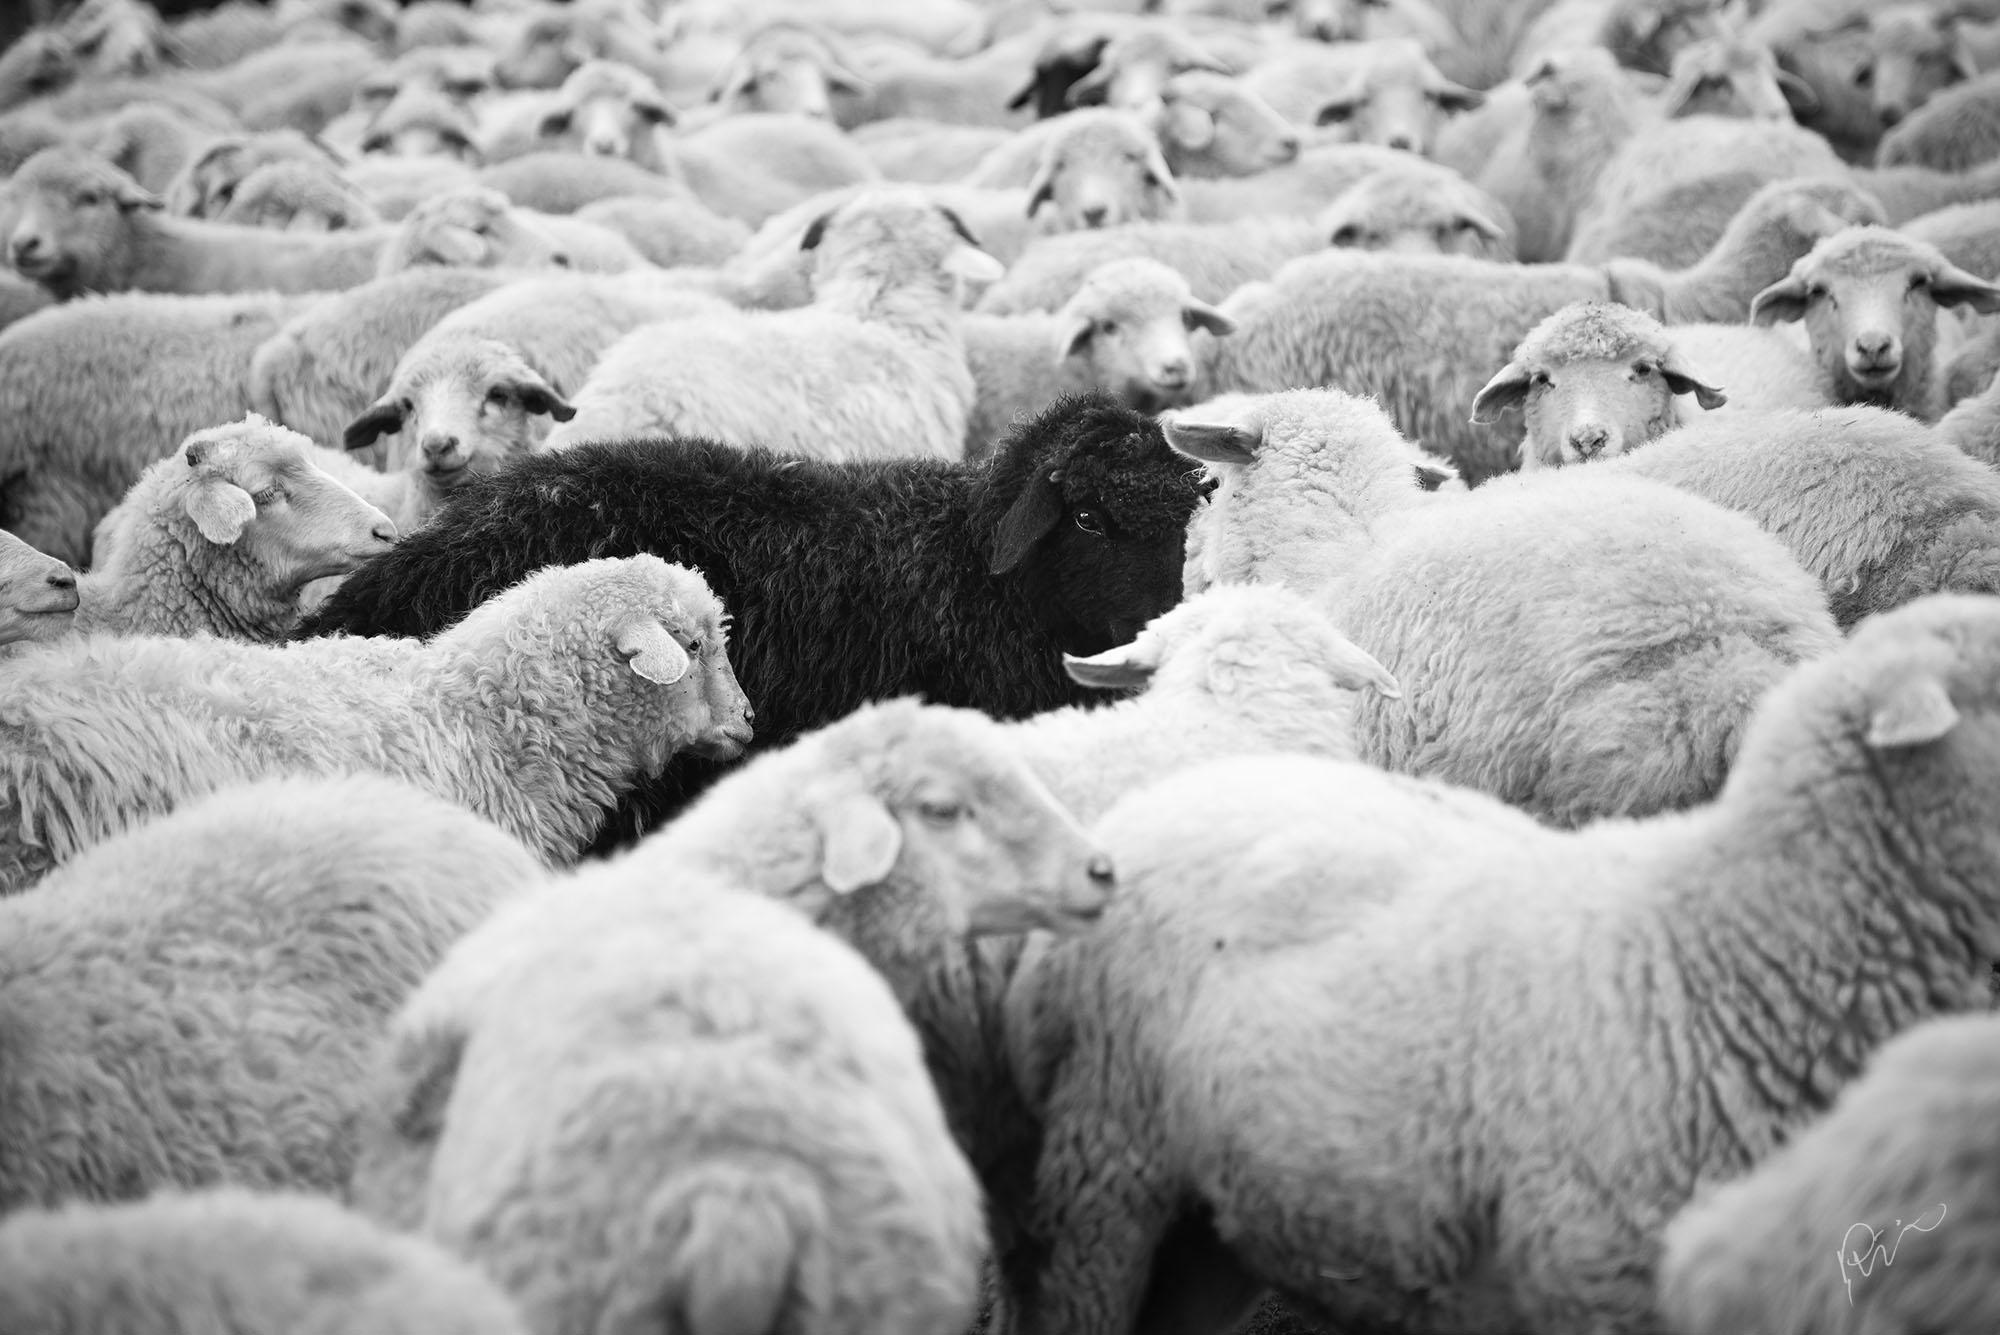 Philip Holsinger Figurative Photograph - Black Sheep and Flock 2 (2/10)